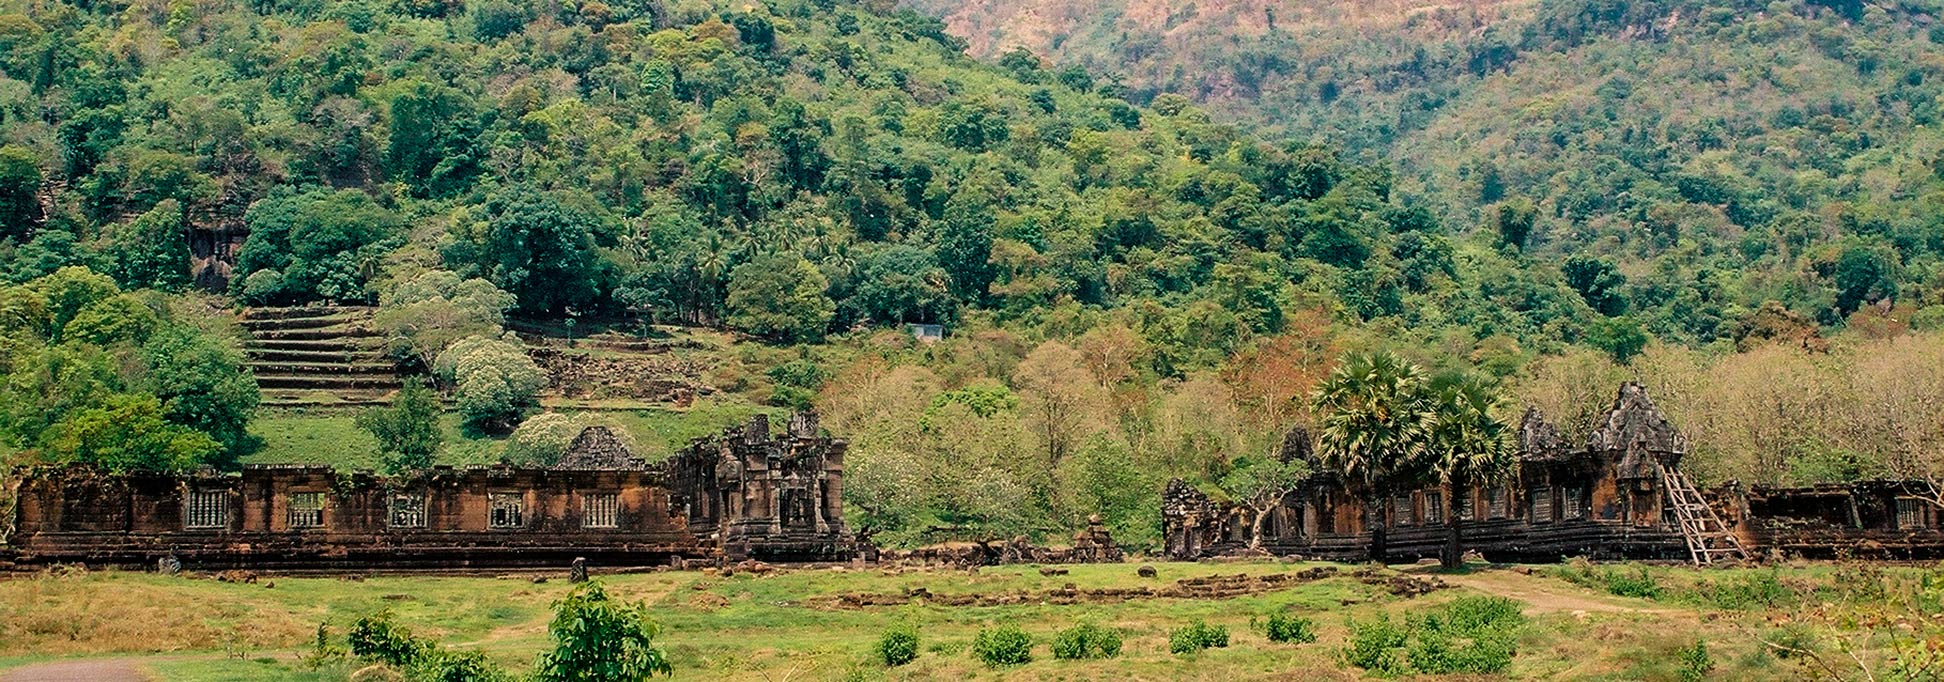 Ruins of a Khmer sanctuary near Champasak